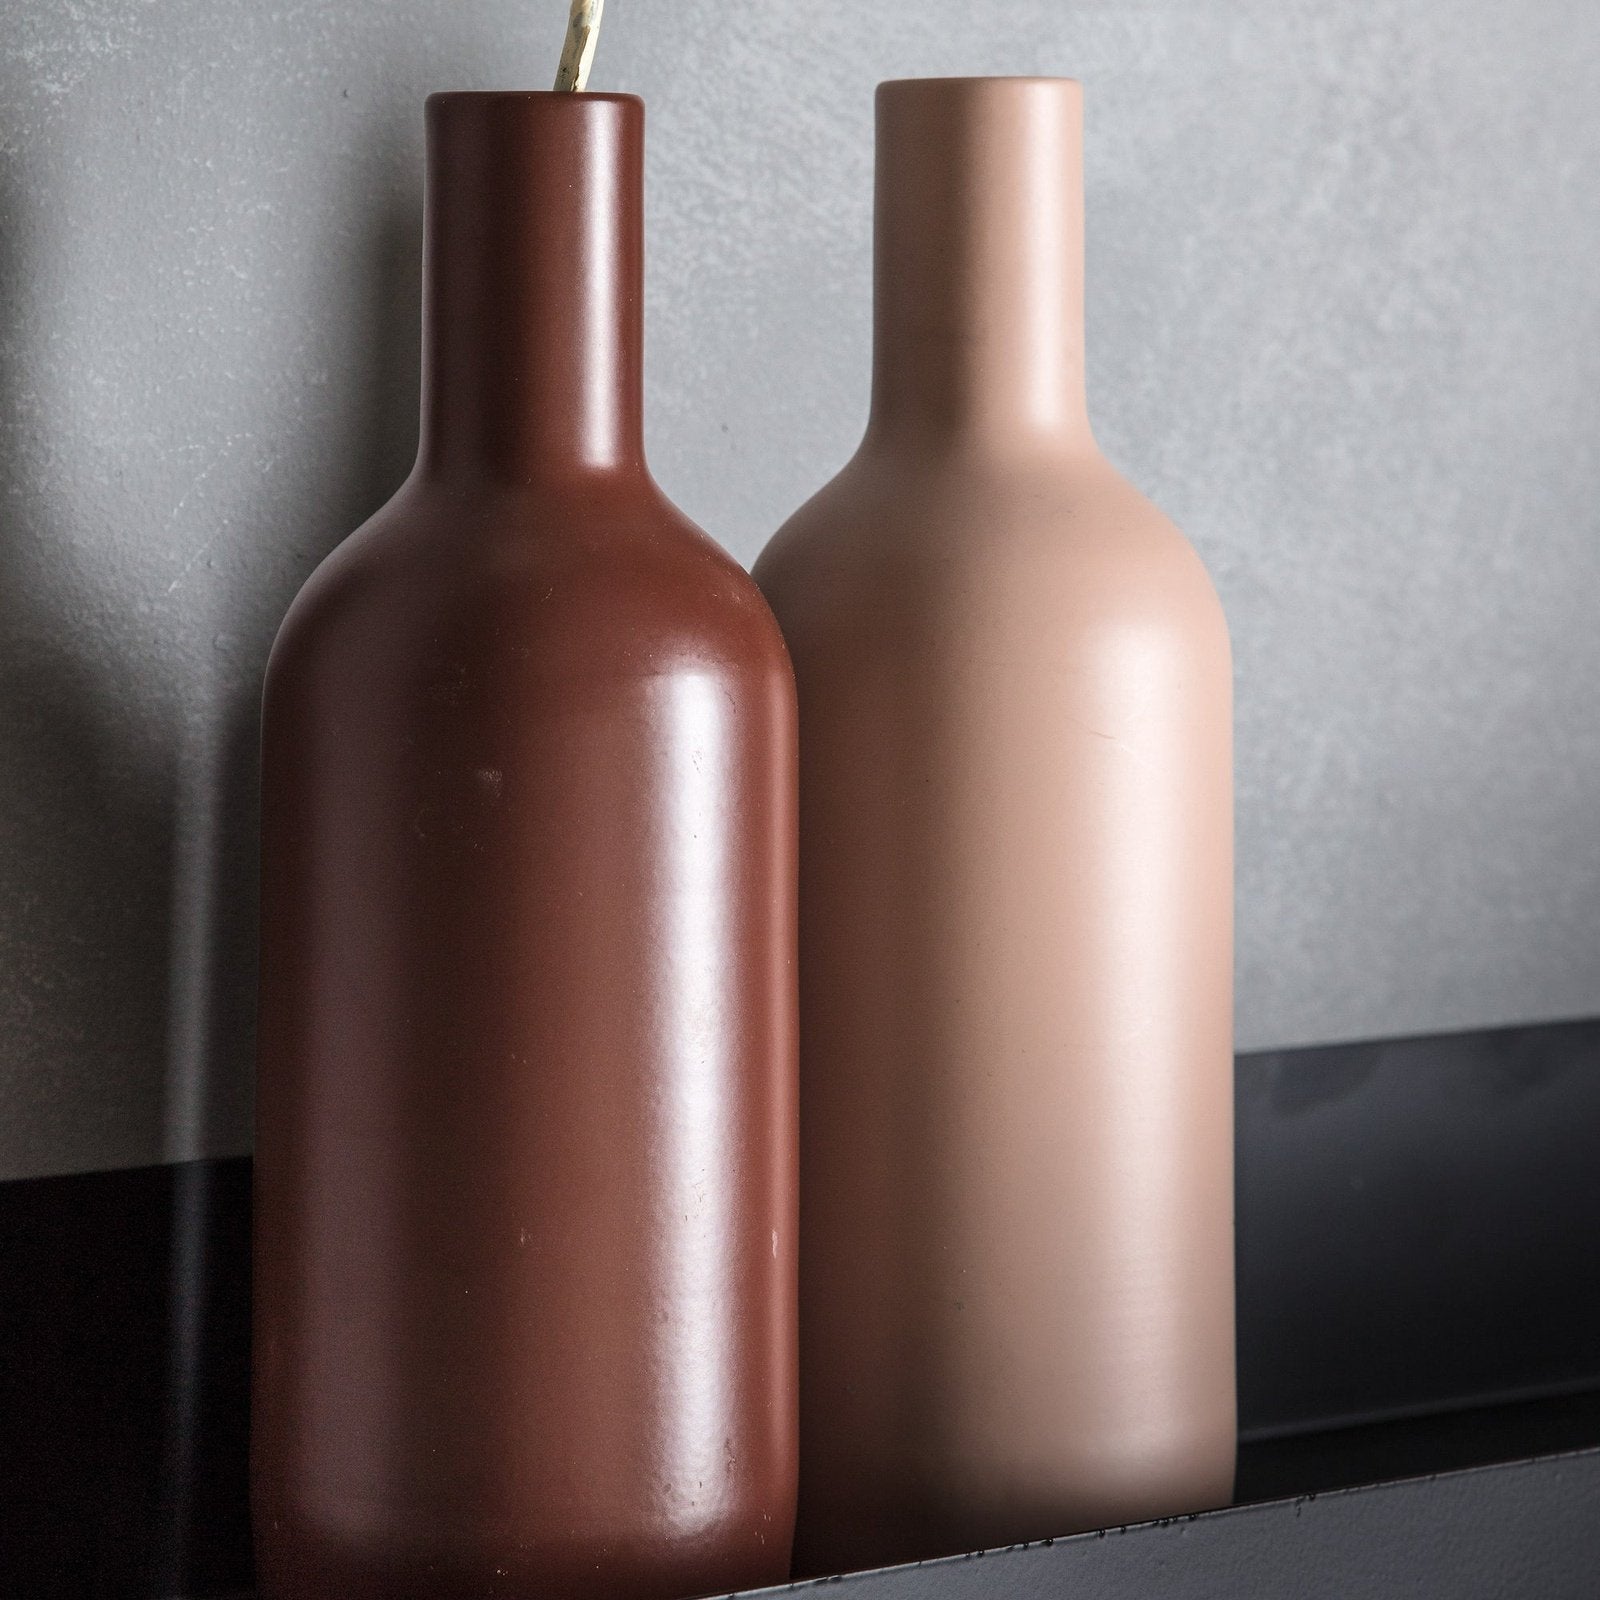 Vivienne Vase 70x70x230mm - Bottle Shaped Iron Vase